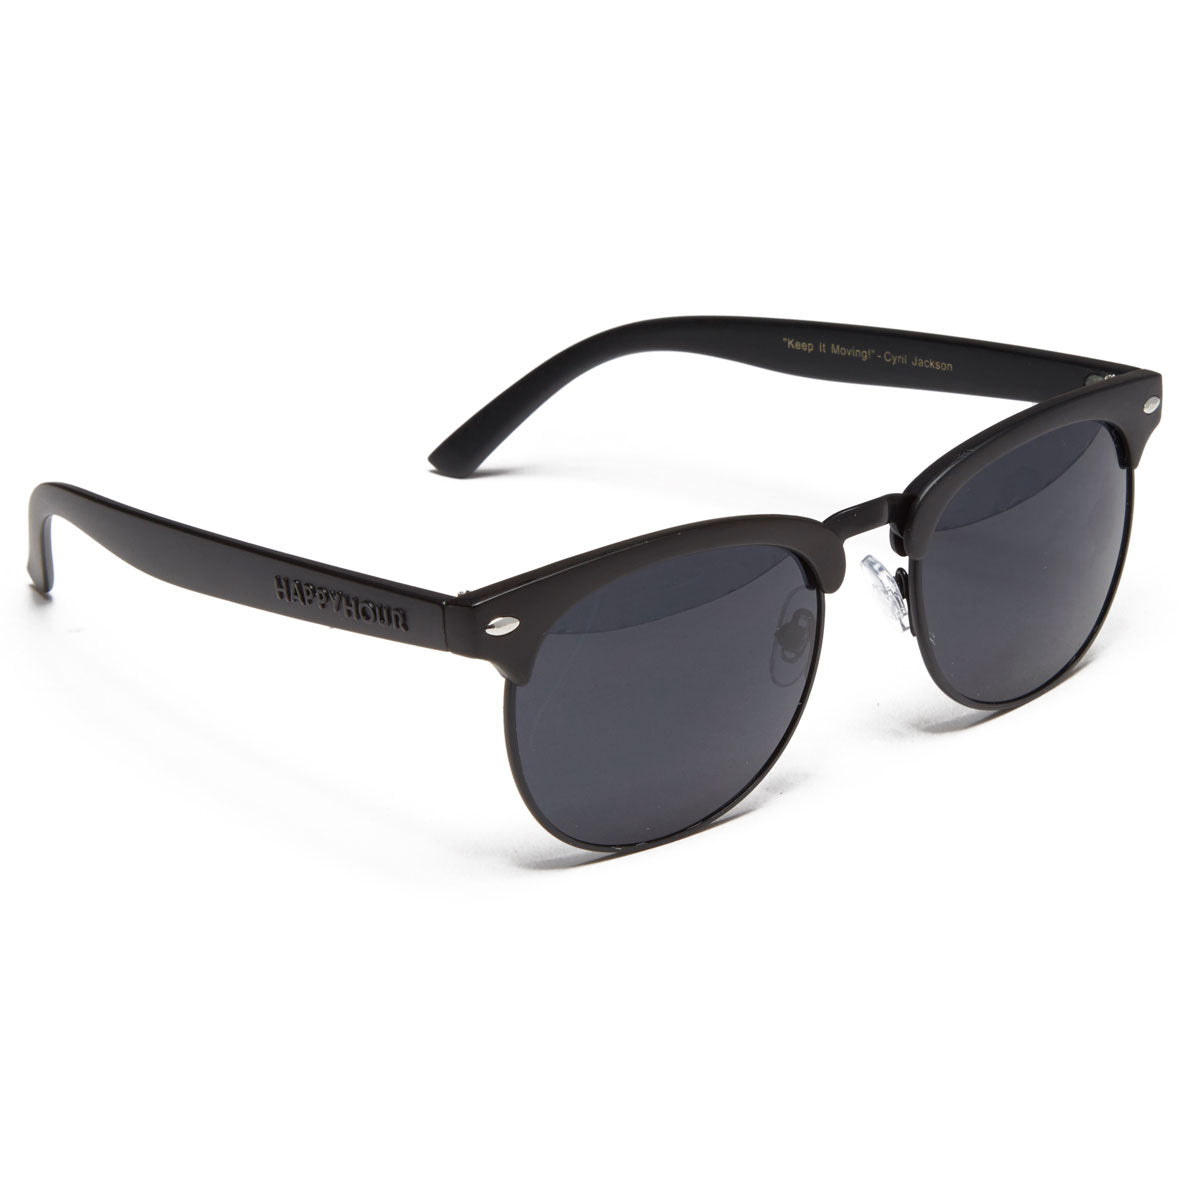 Happy Hour G2 Sunglasses - Black image 1